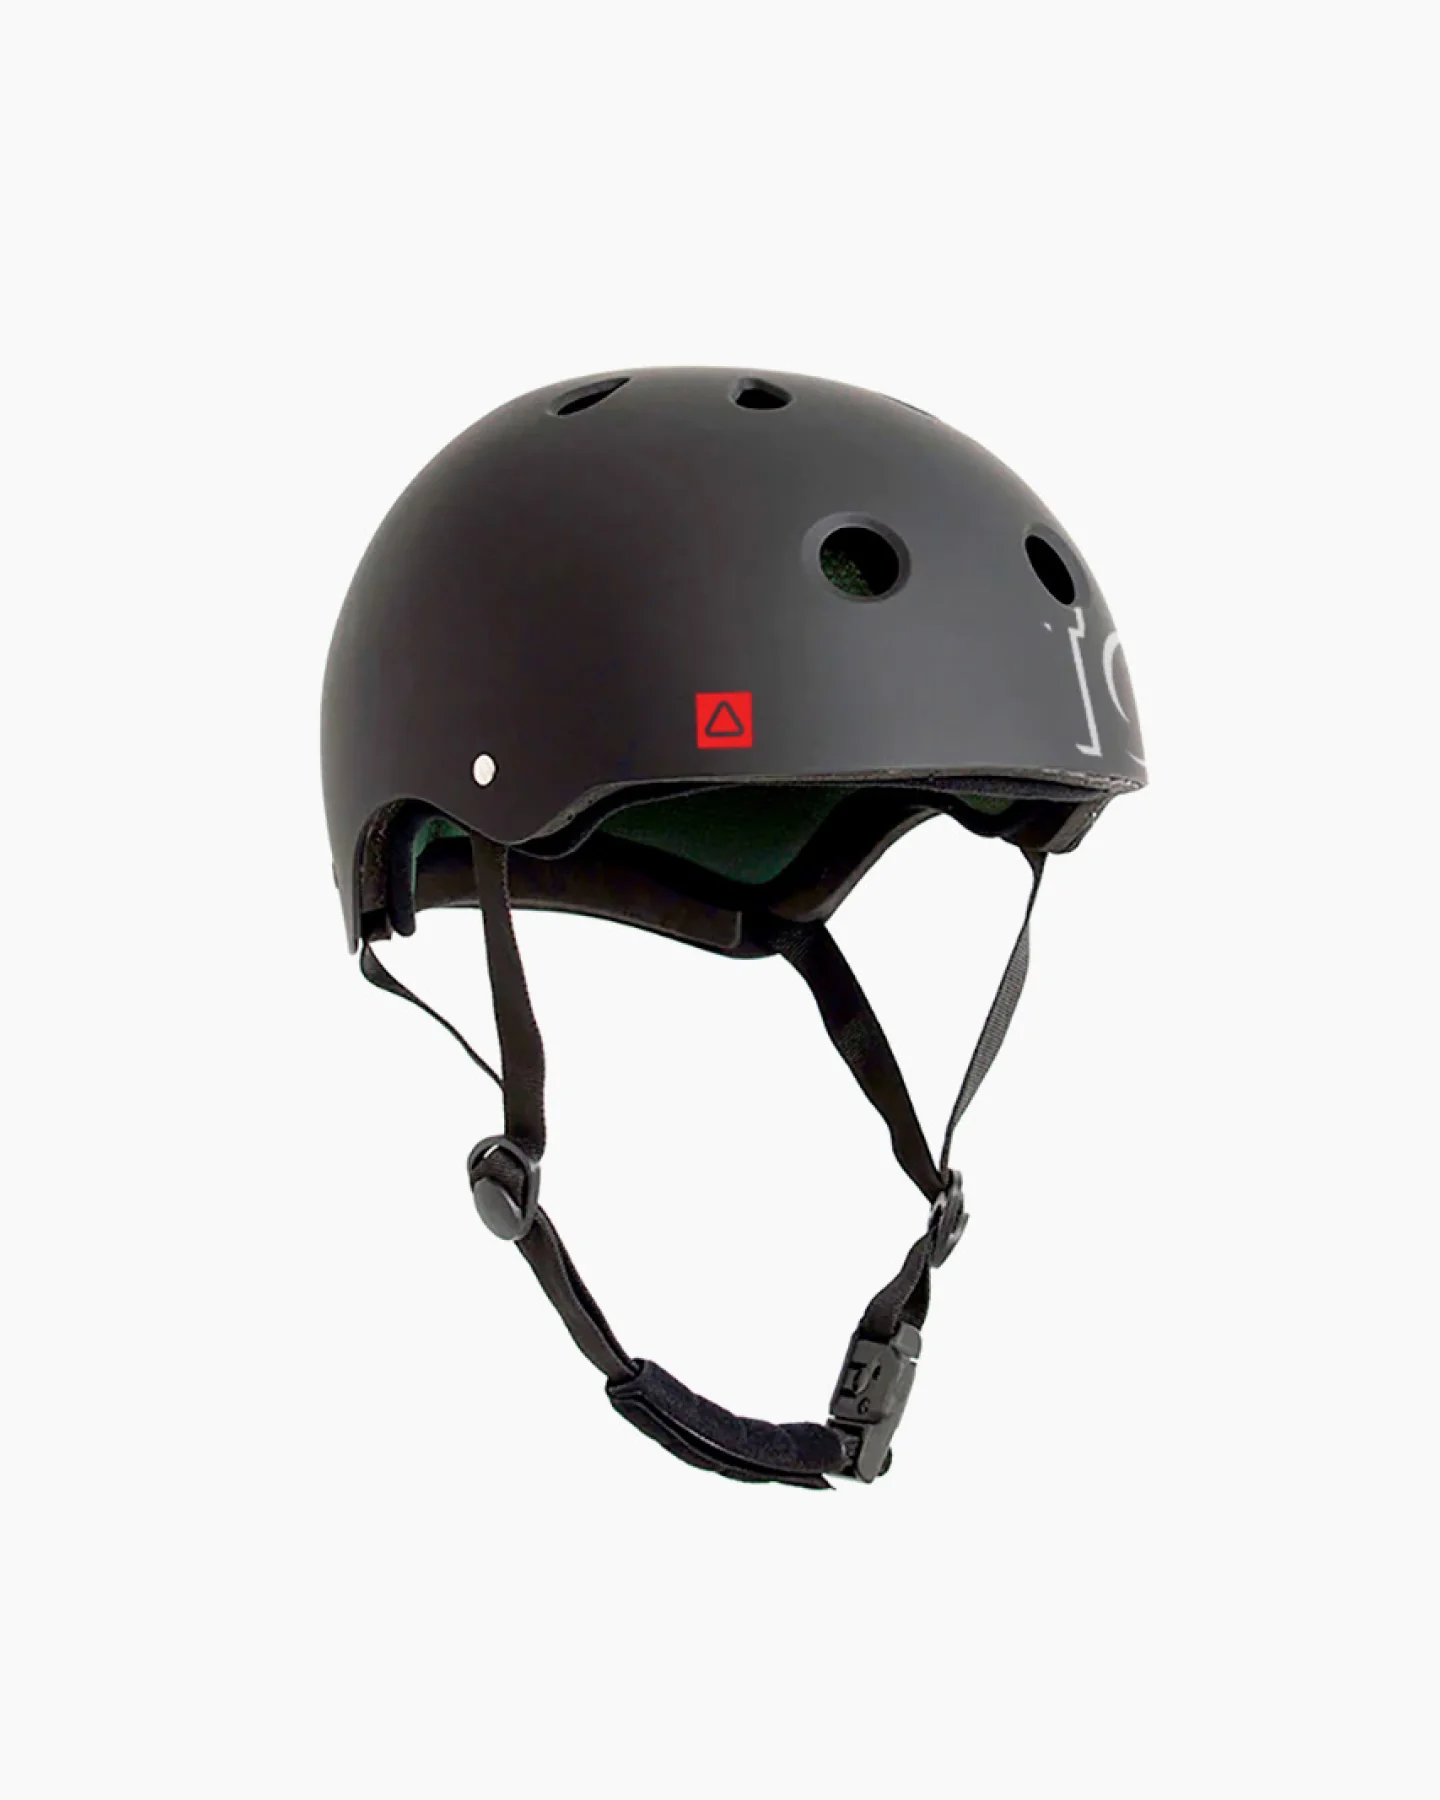 Follow Pro helmet black